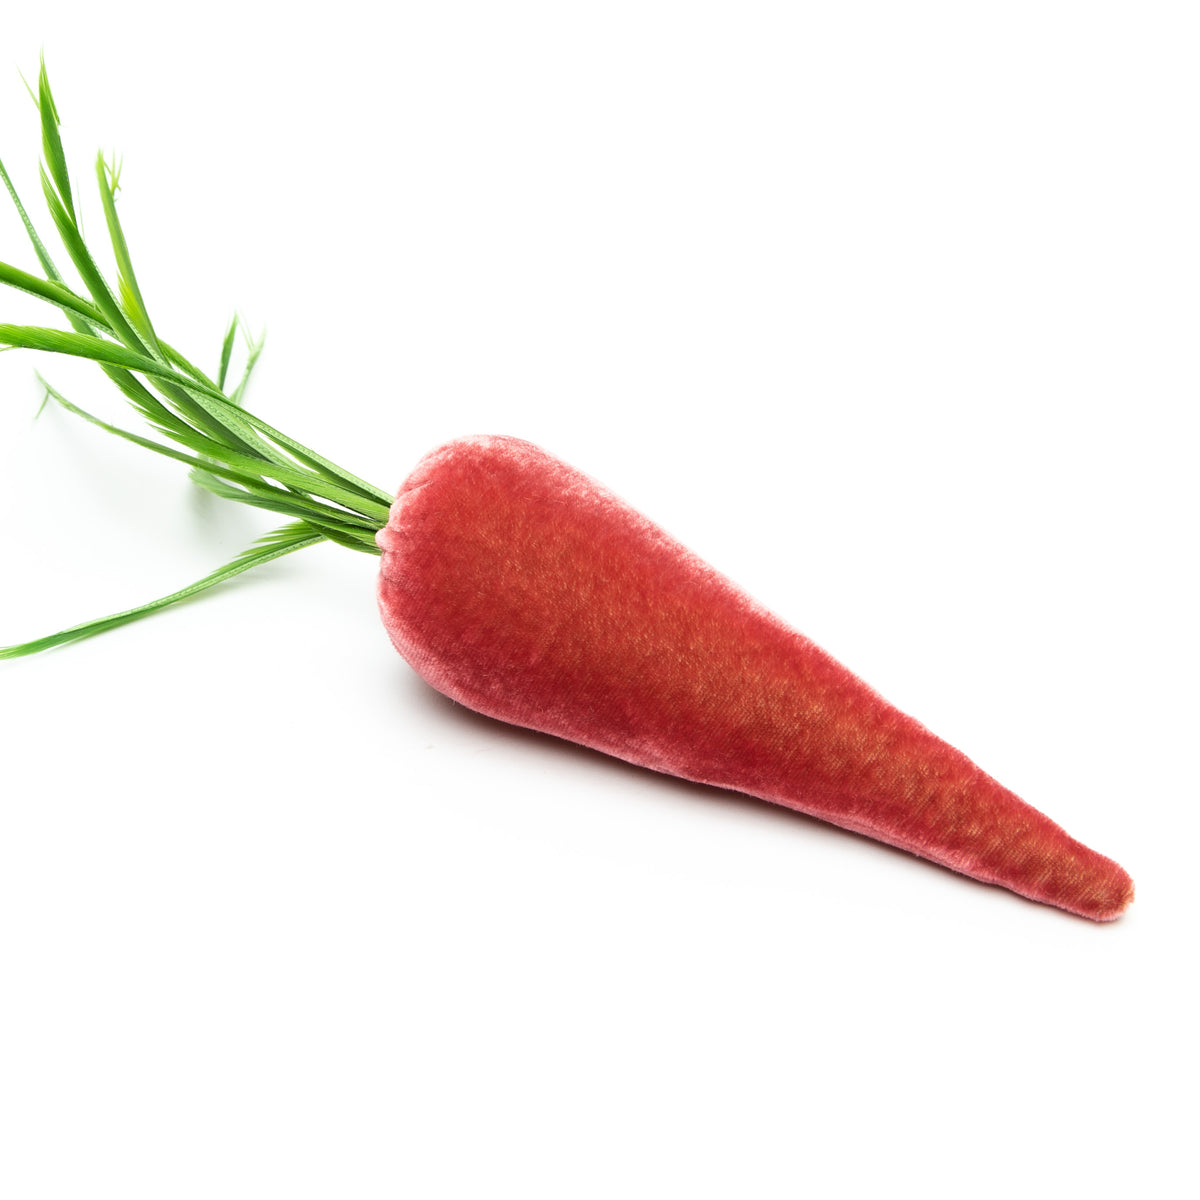 Carrot - Rhubarb